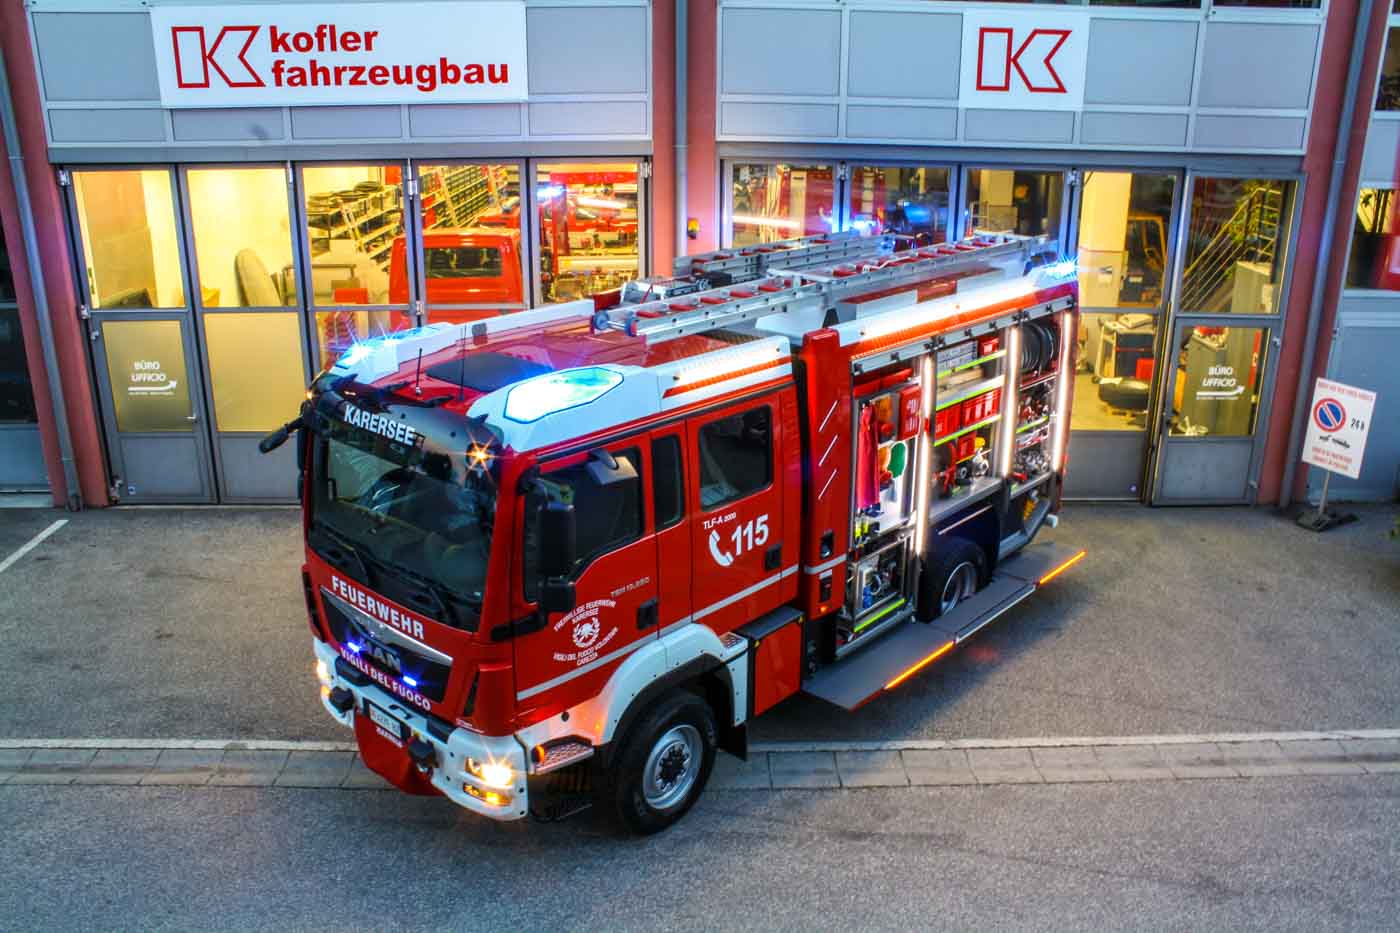 FF-Karersee-Kofler-Fahrzeugbau